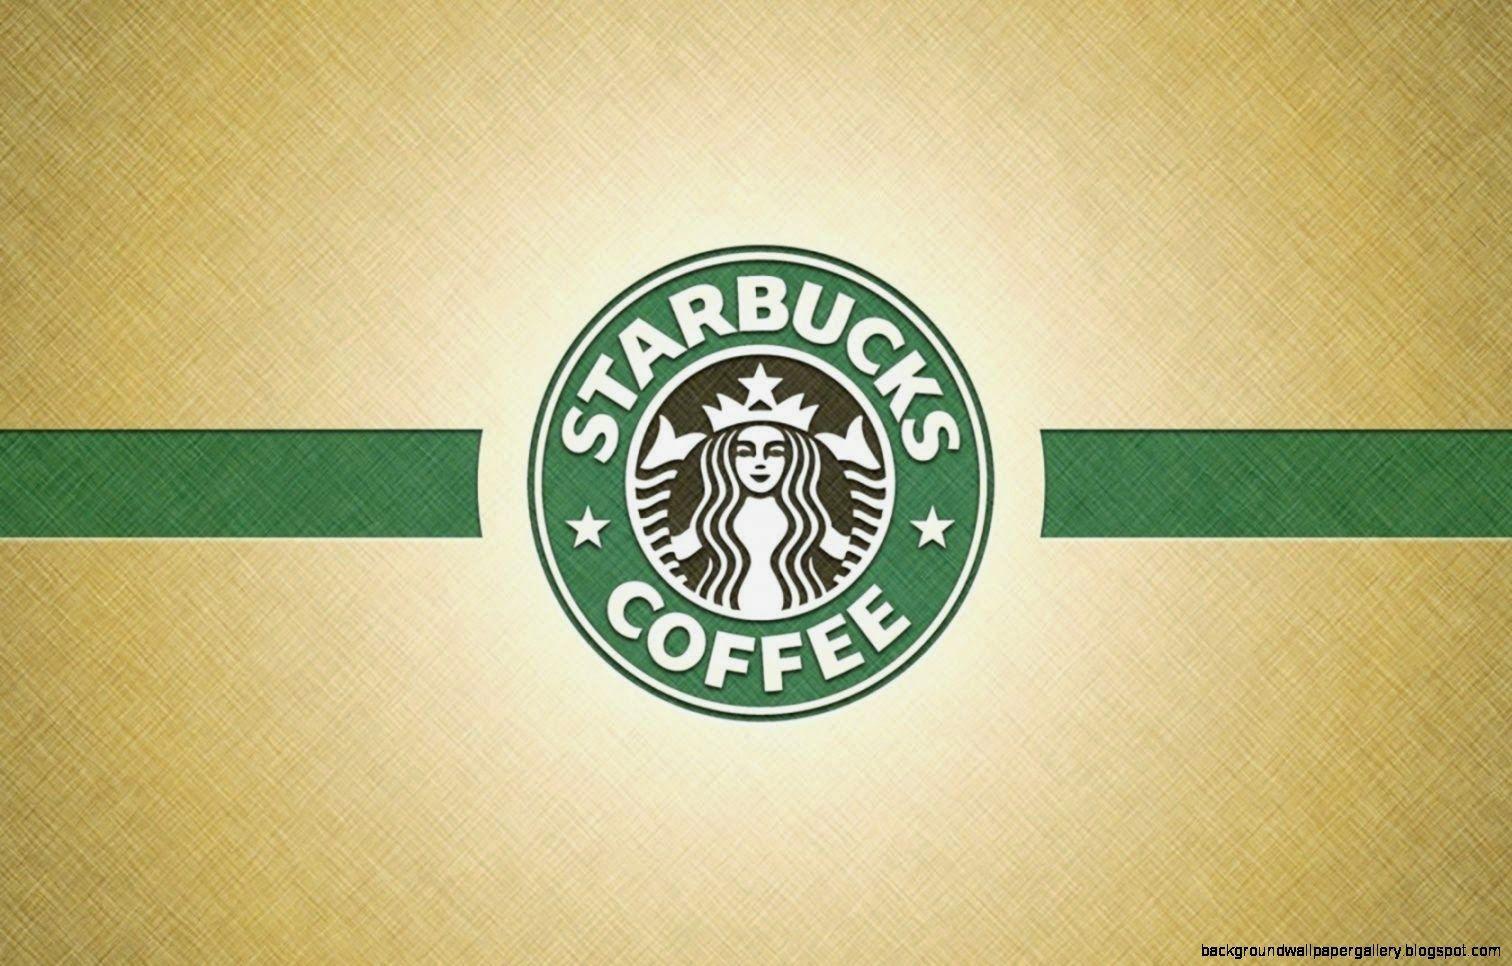 Wallpaper HD Starbucks Logo Desktop. Background Wallpaper Gallery